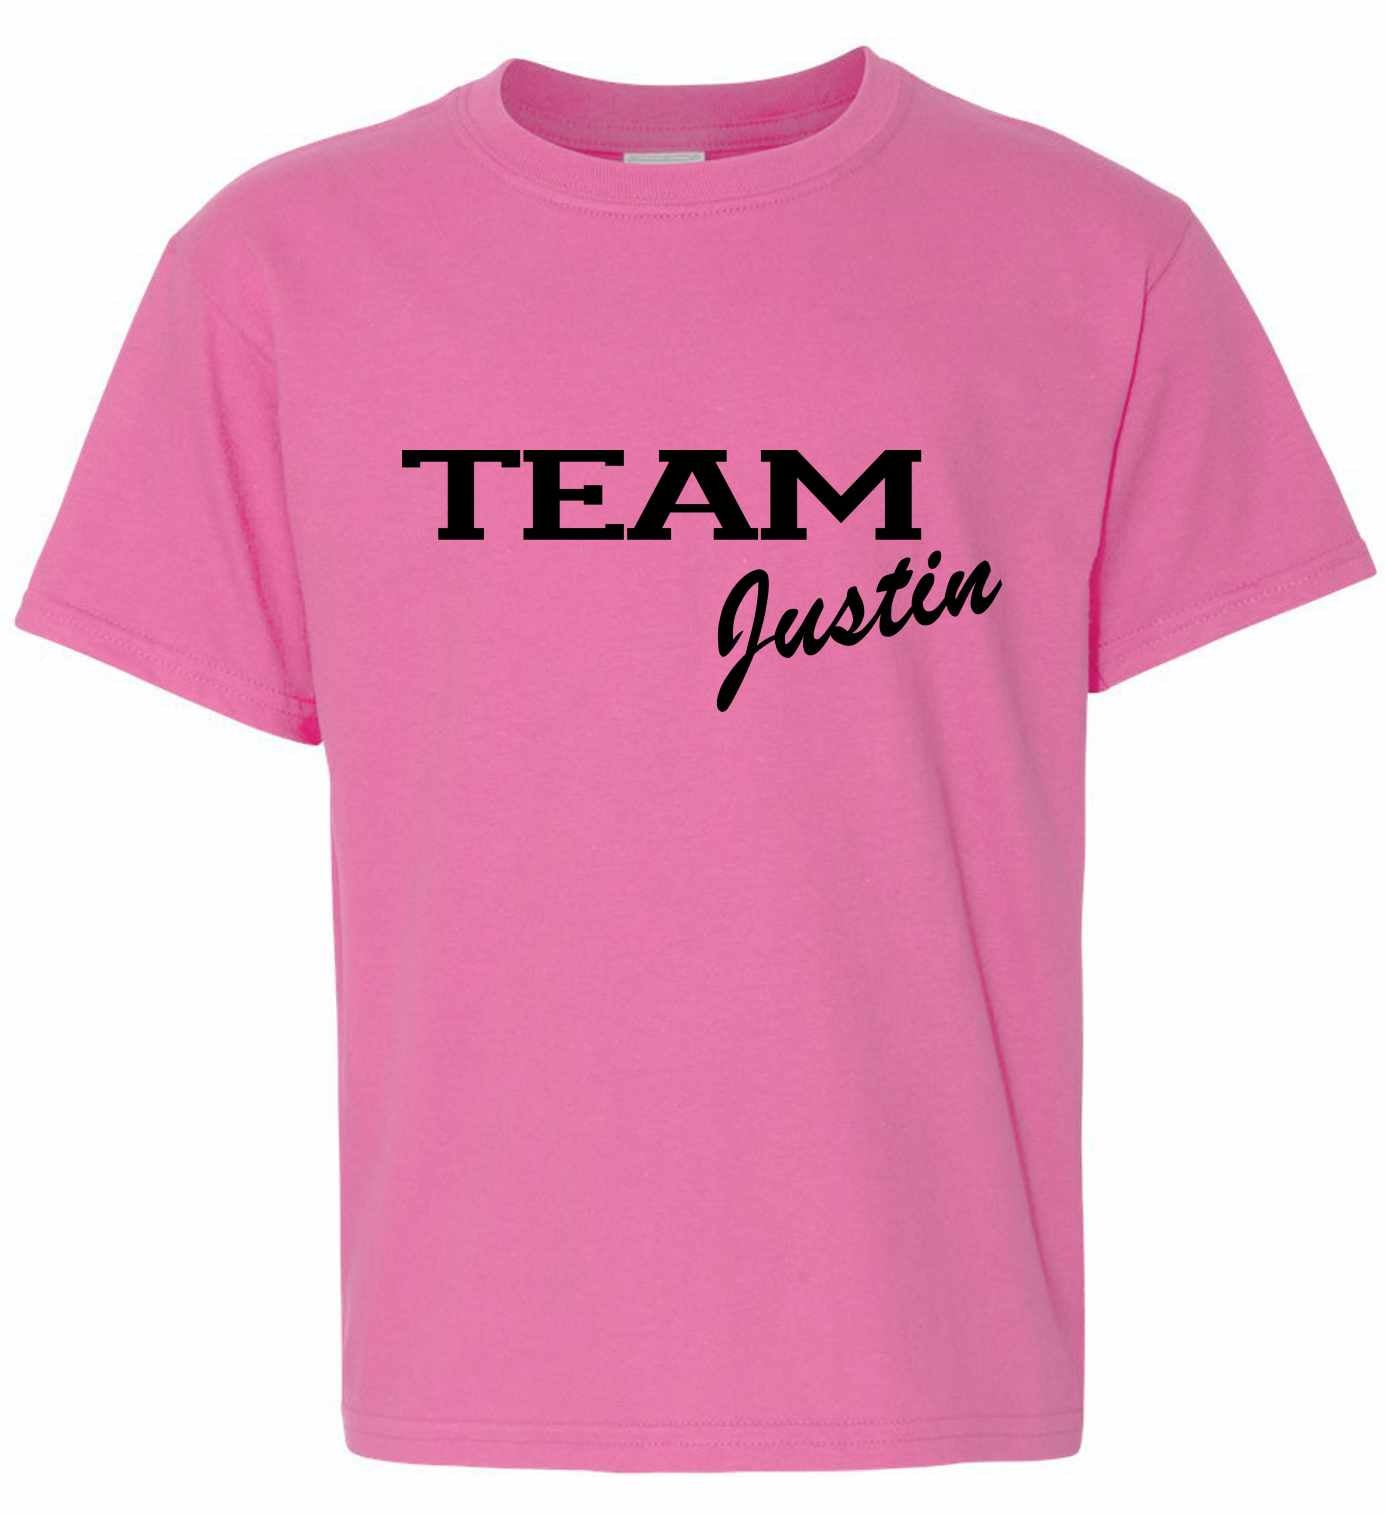 Team Justin on Kids T-Shirt (#635-201)